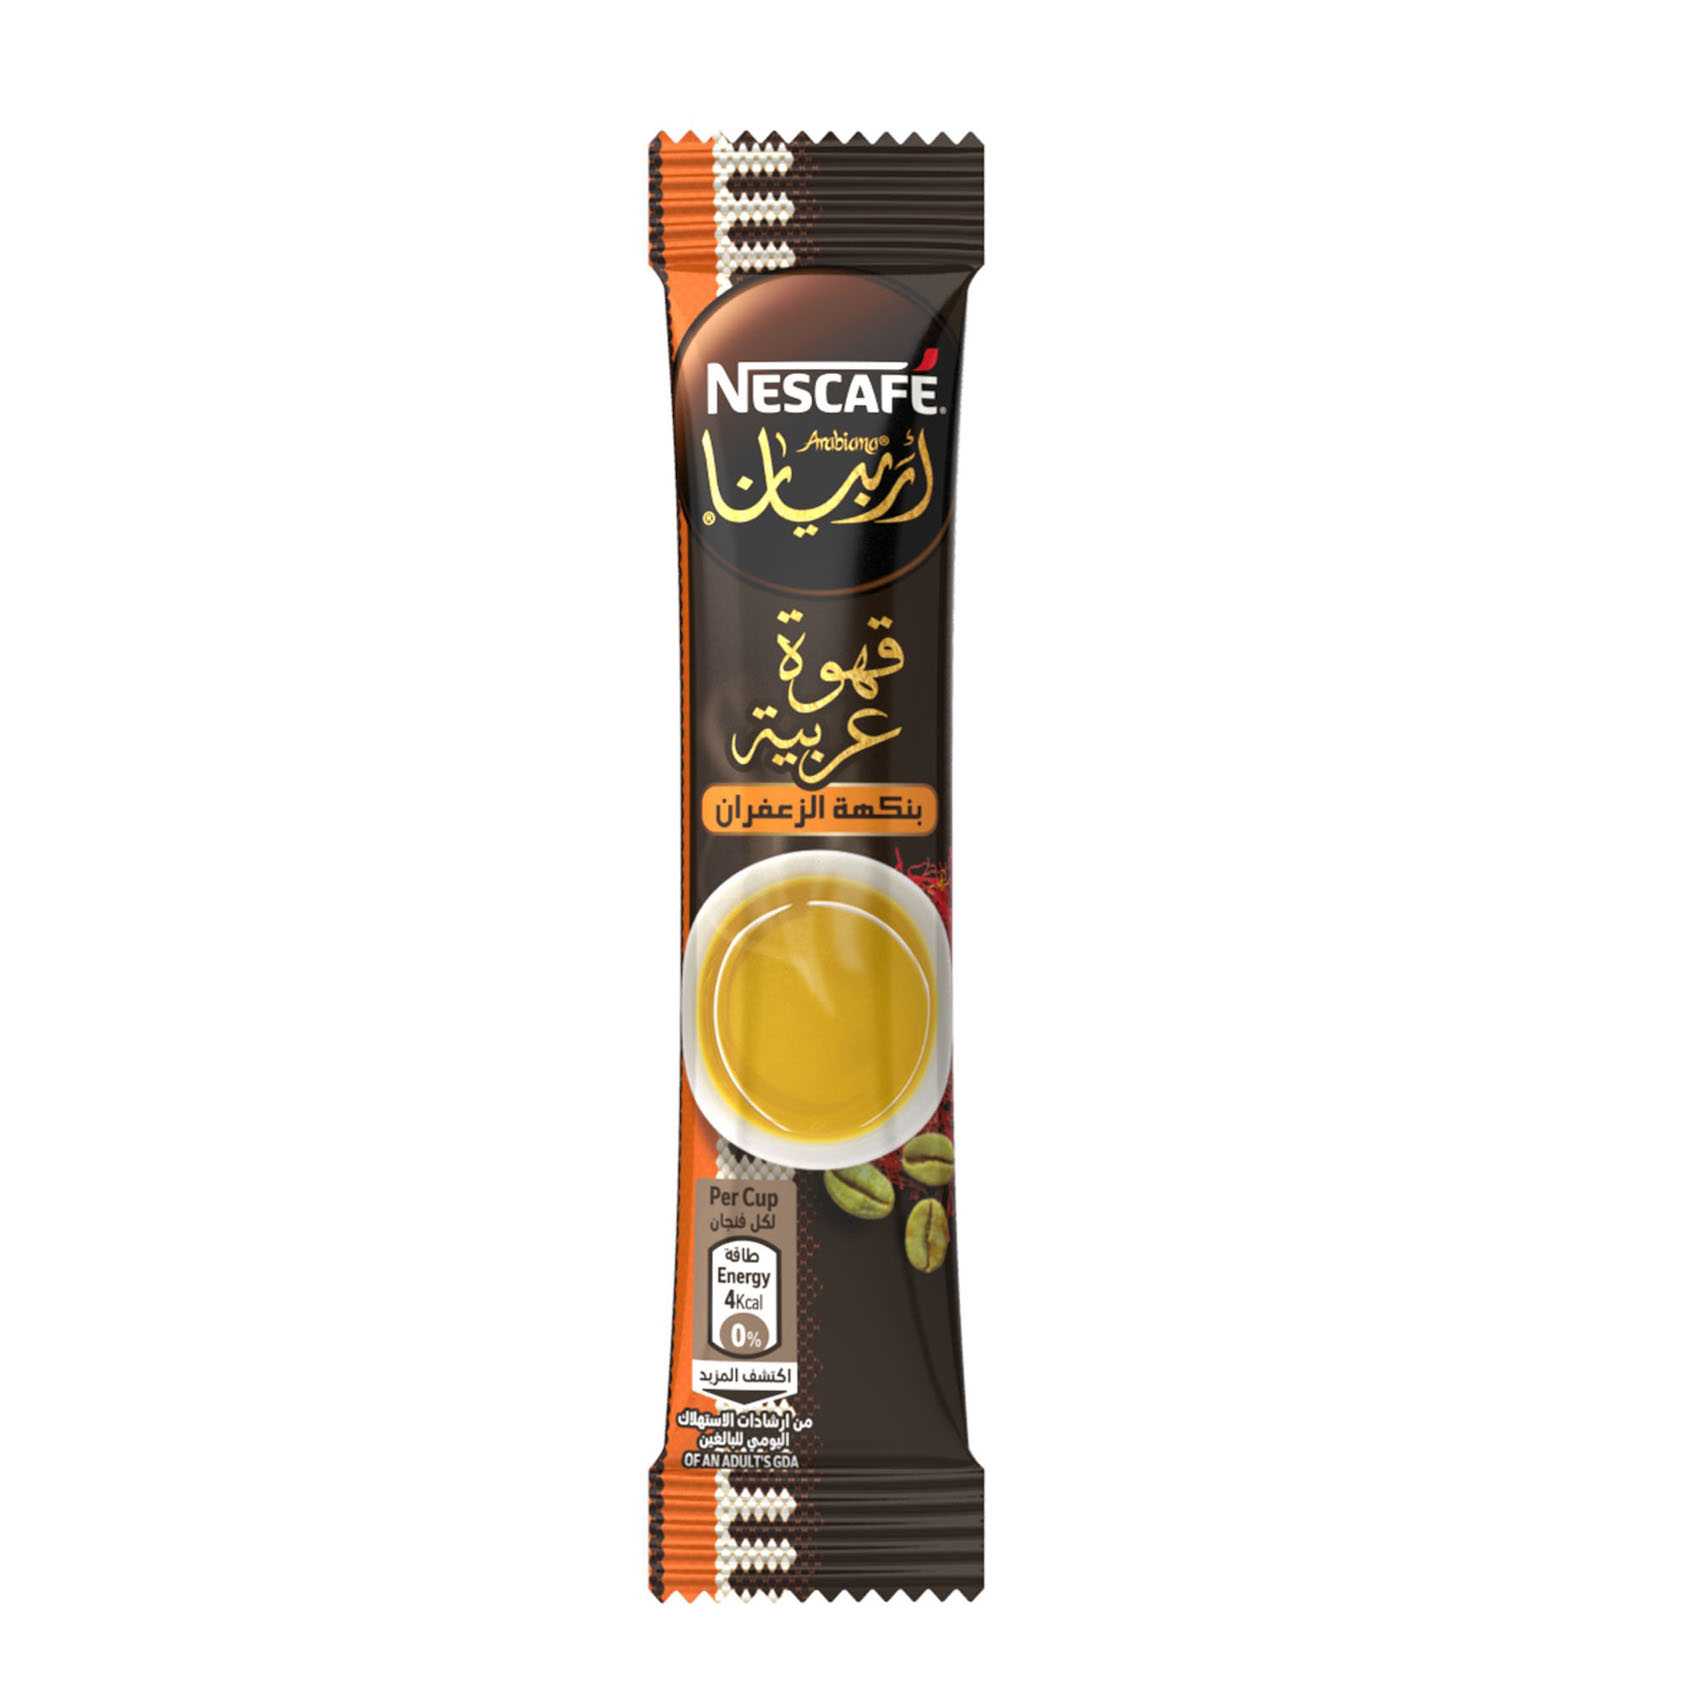 Nestle Nescafe Arabiana Saffron Flavour 3g